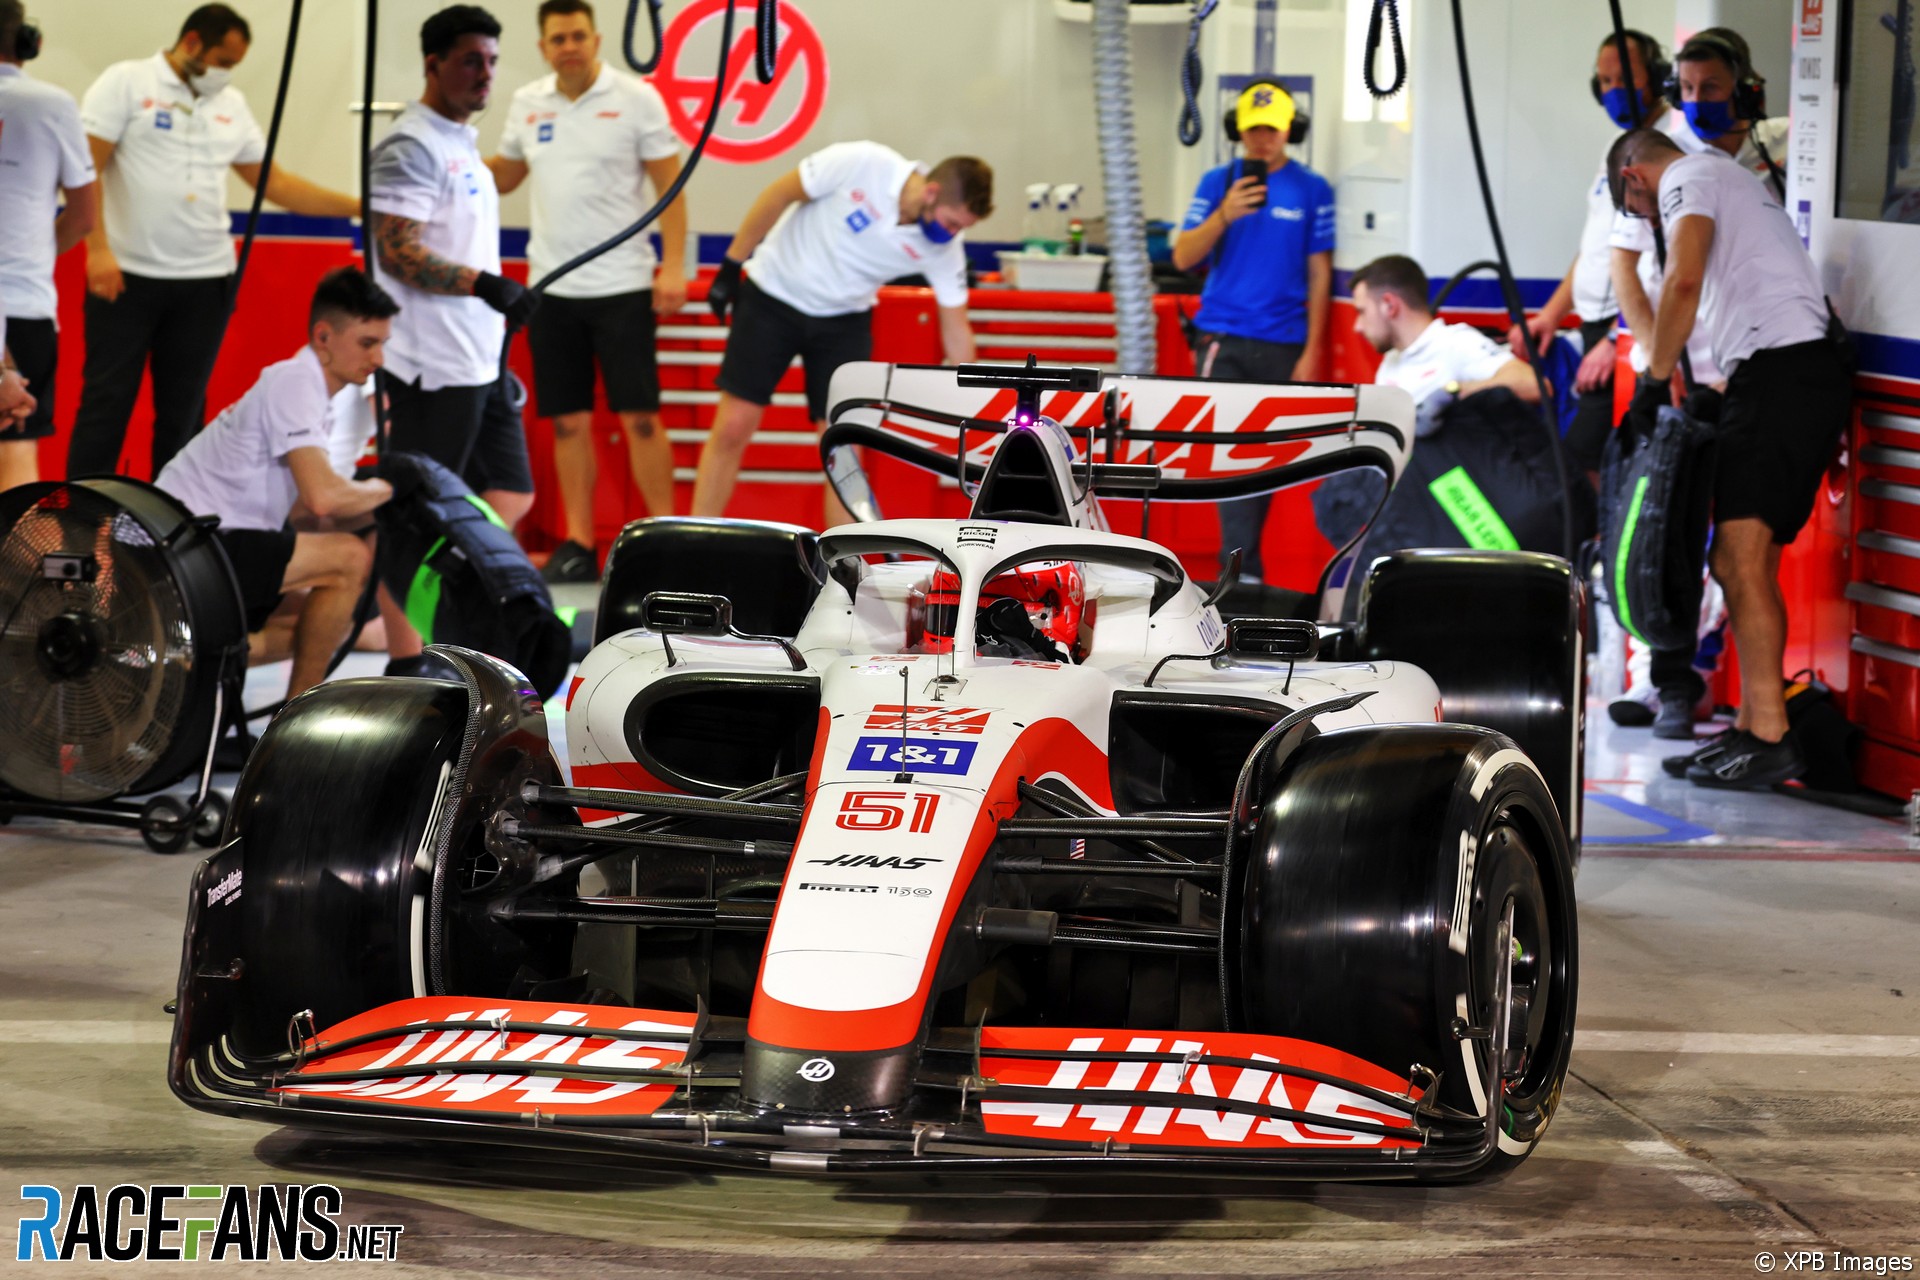 Pietro Fittipaldi, Haas, Bahrain International Circuit, 2022